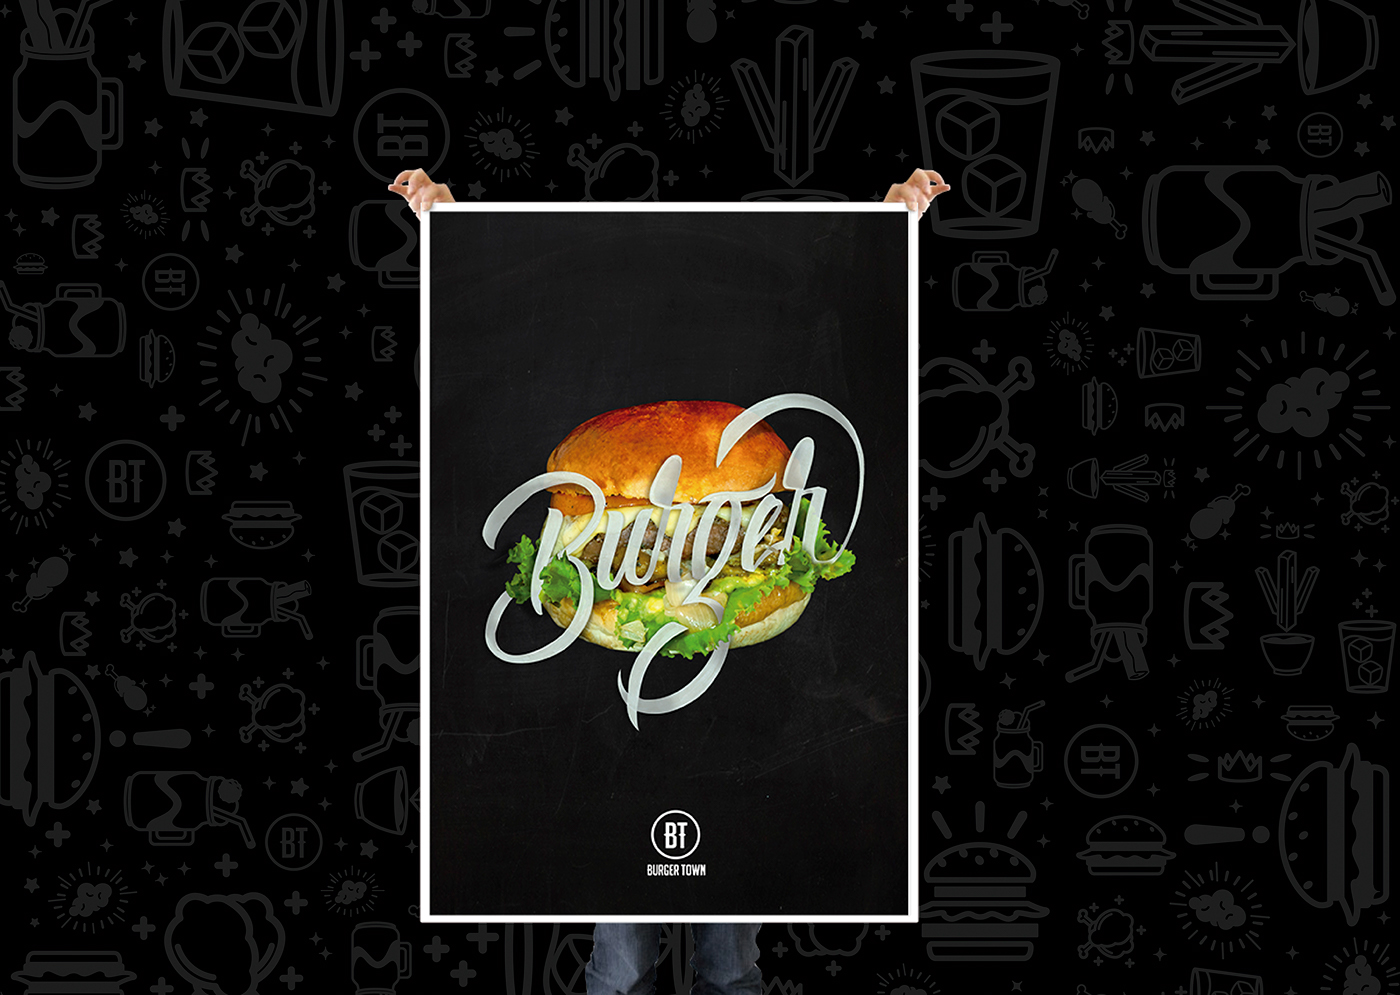 #Branding #packaging #Design #Burger #photography #letters #lettering #illustration